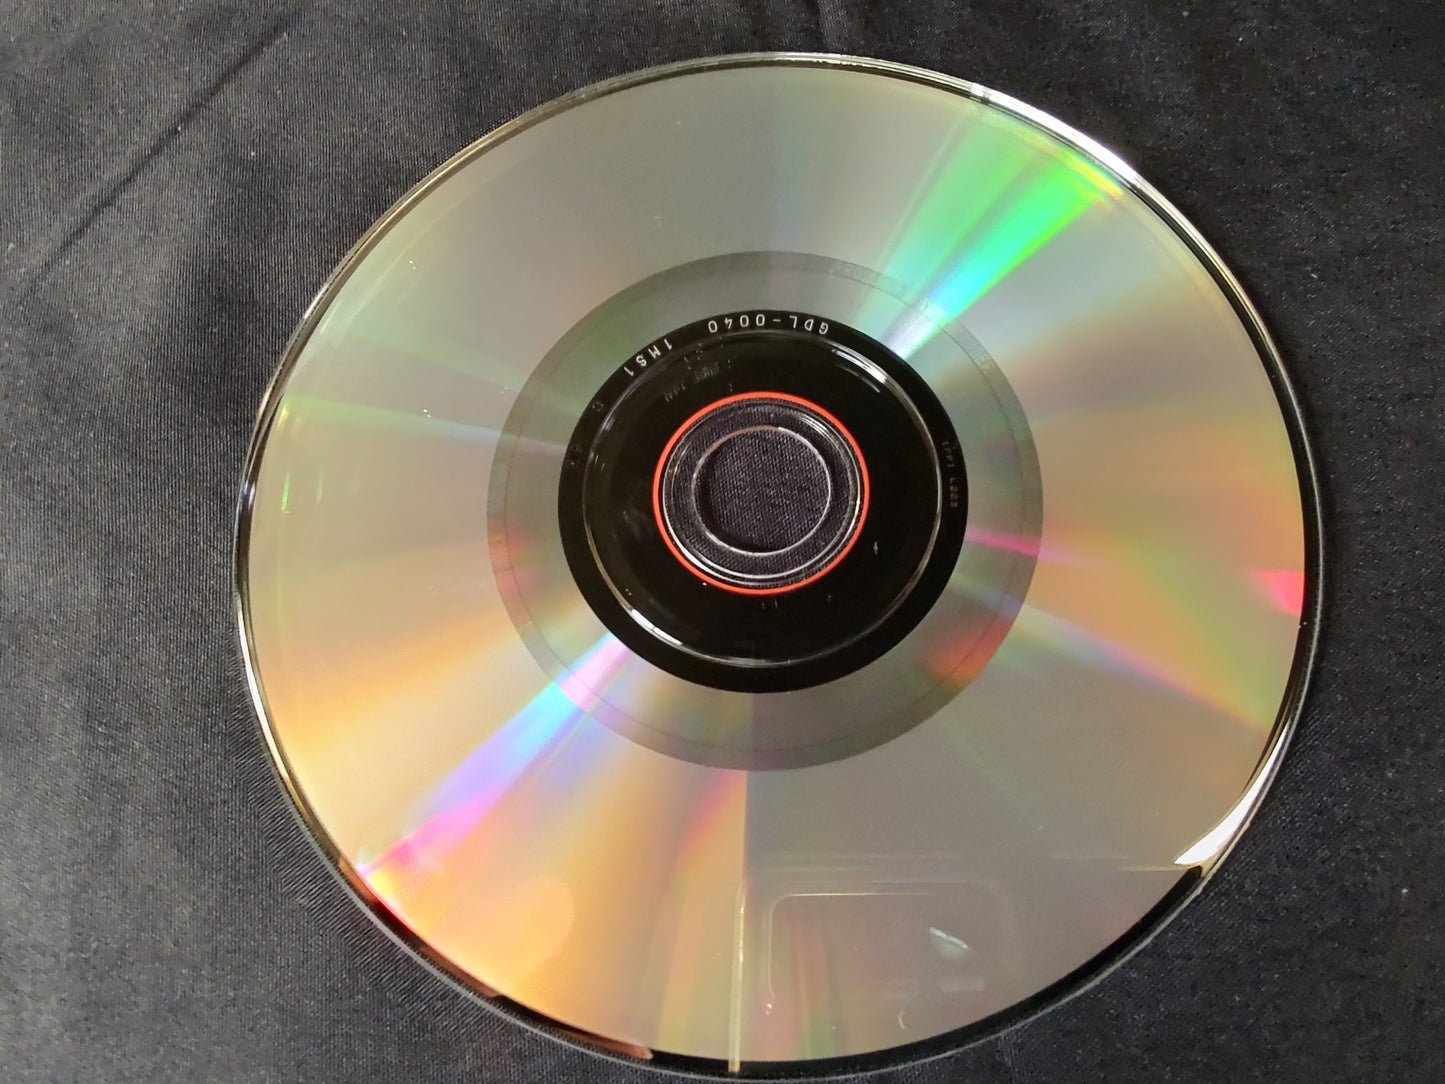 Karous MILESTONE NAOMI GD-ROM Disk, KEY chip, Manual, Paper works set-f0512-